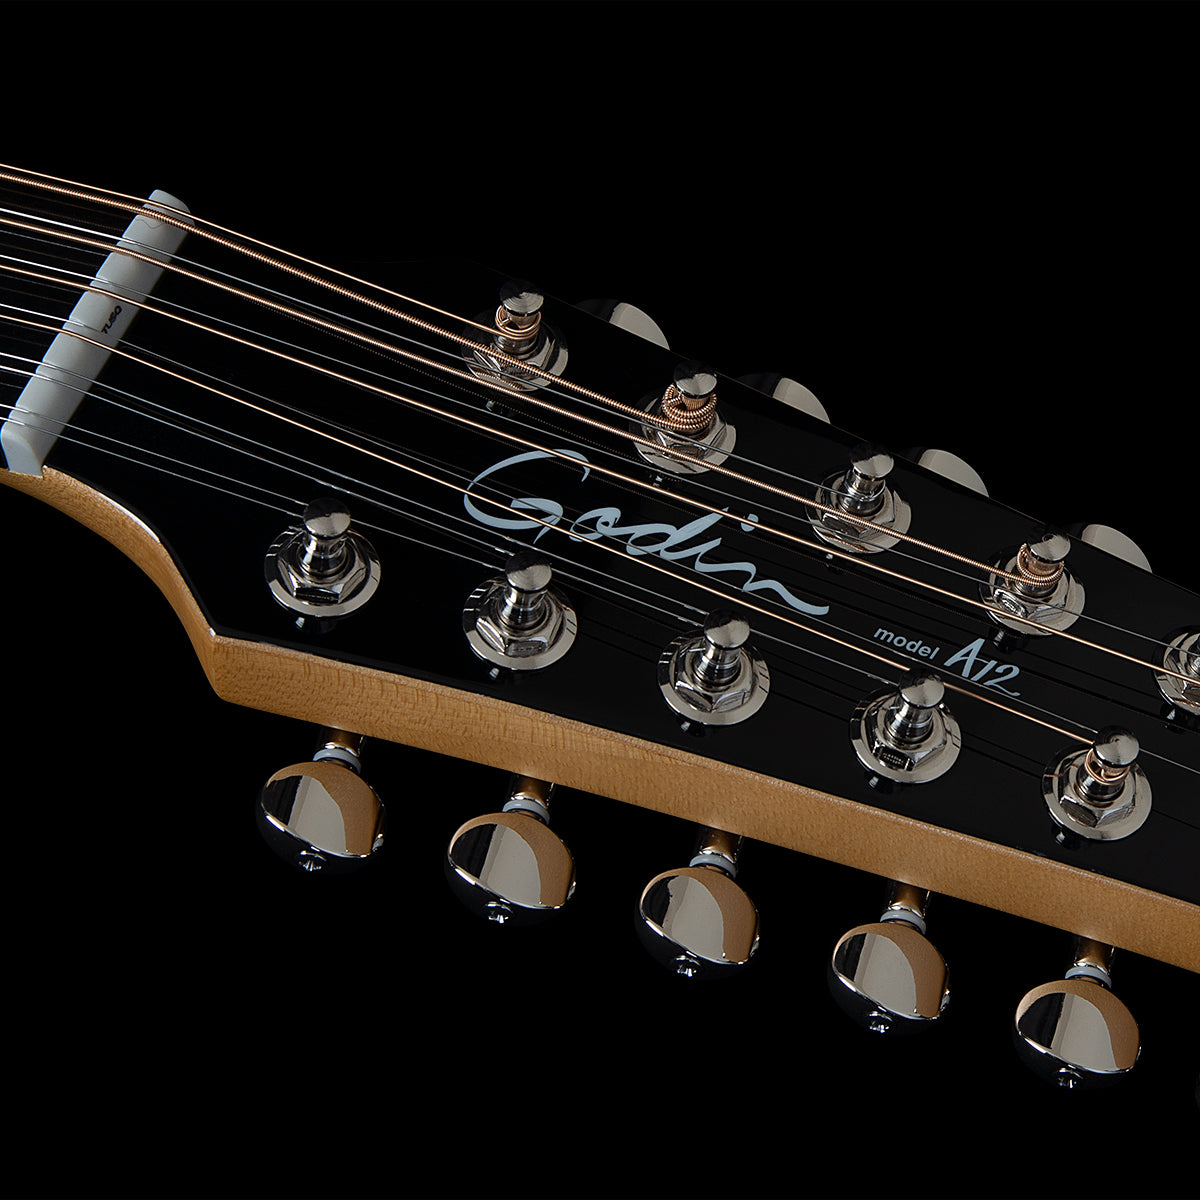 Godin A12 Black HG  Electric Acoustic 12 String Guitar